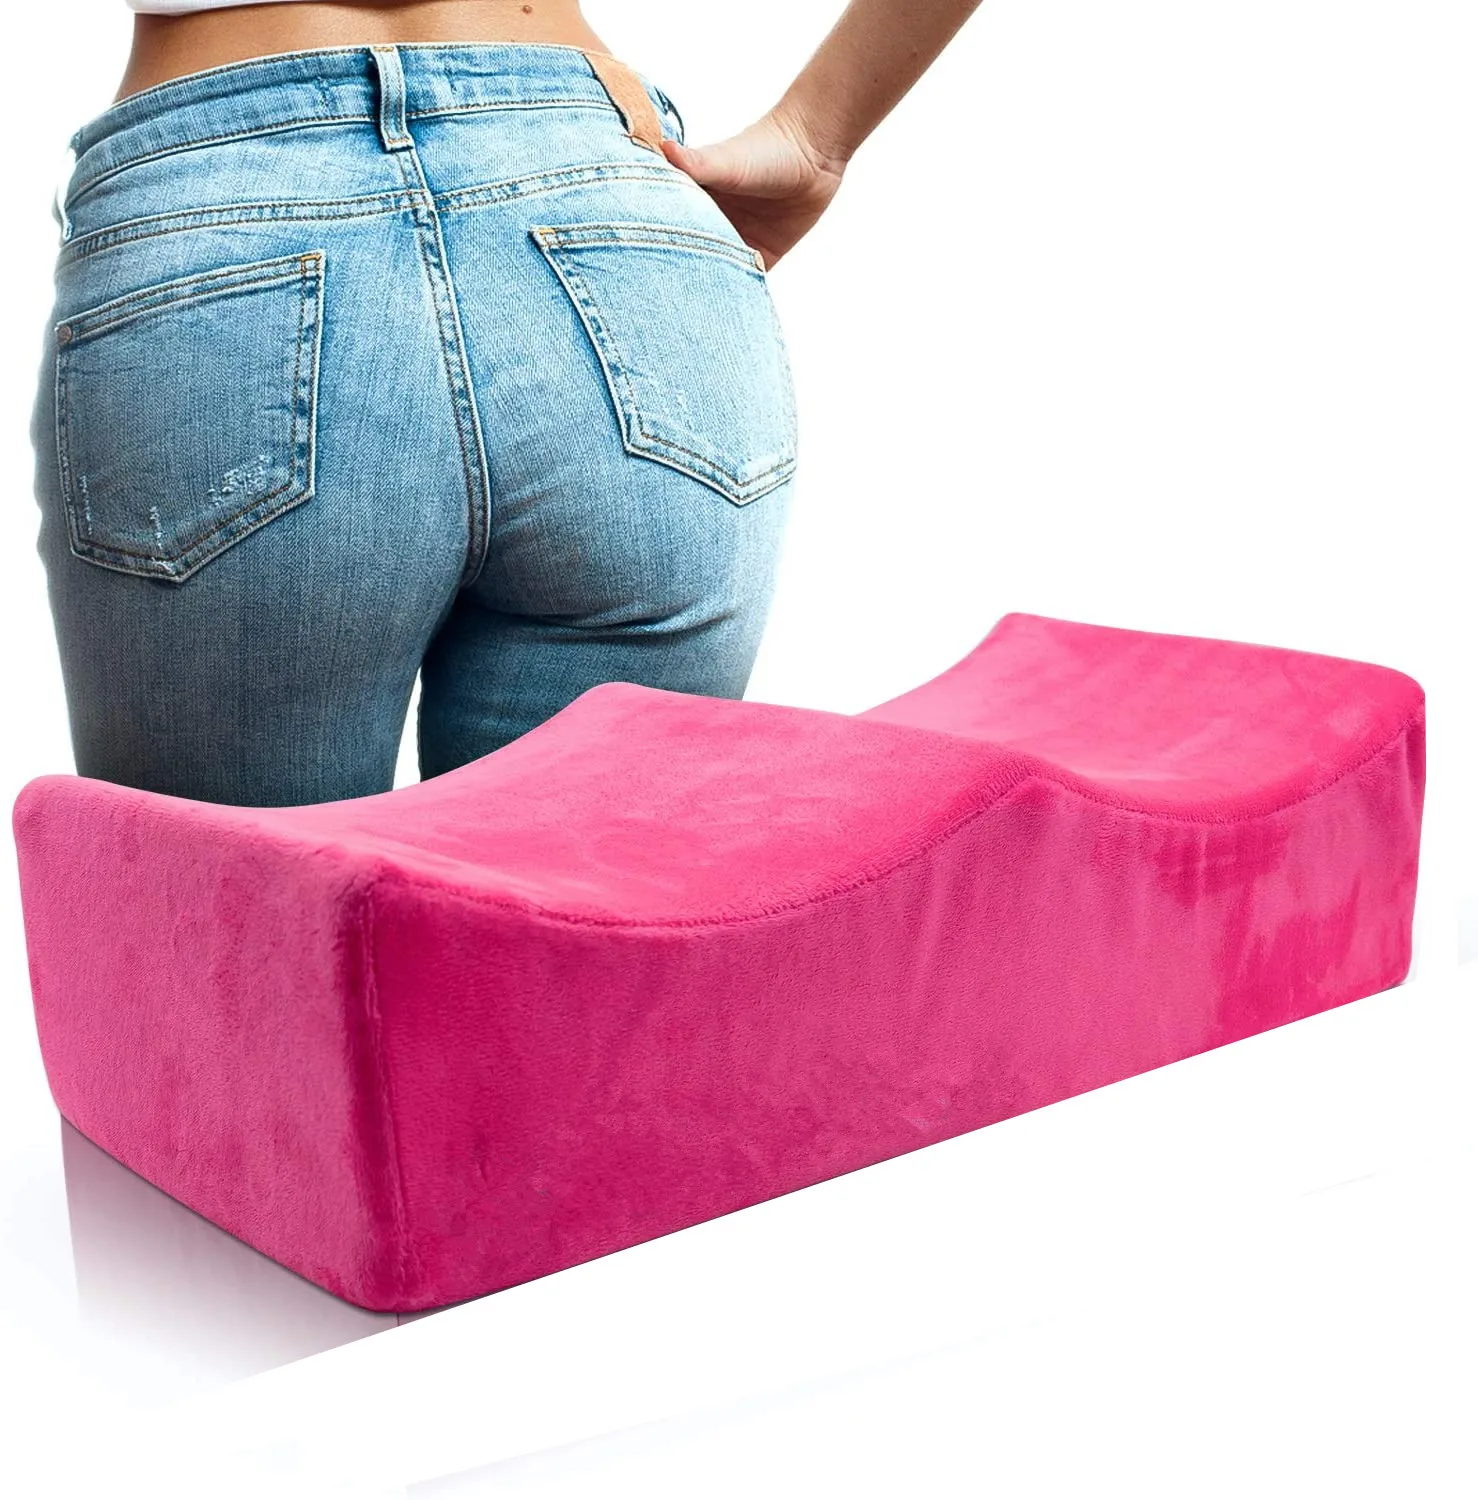 BBL Pillow Seat Pad Foam Buttock Cushion Sponge After Surgery